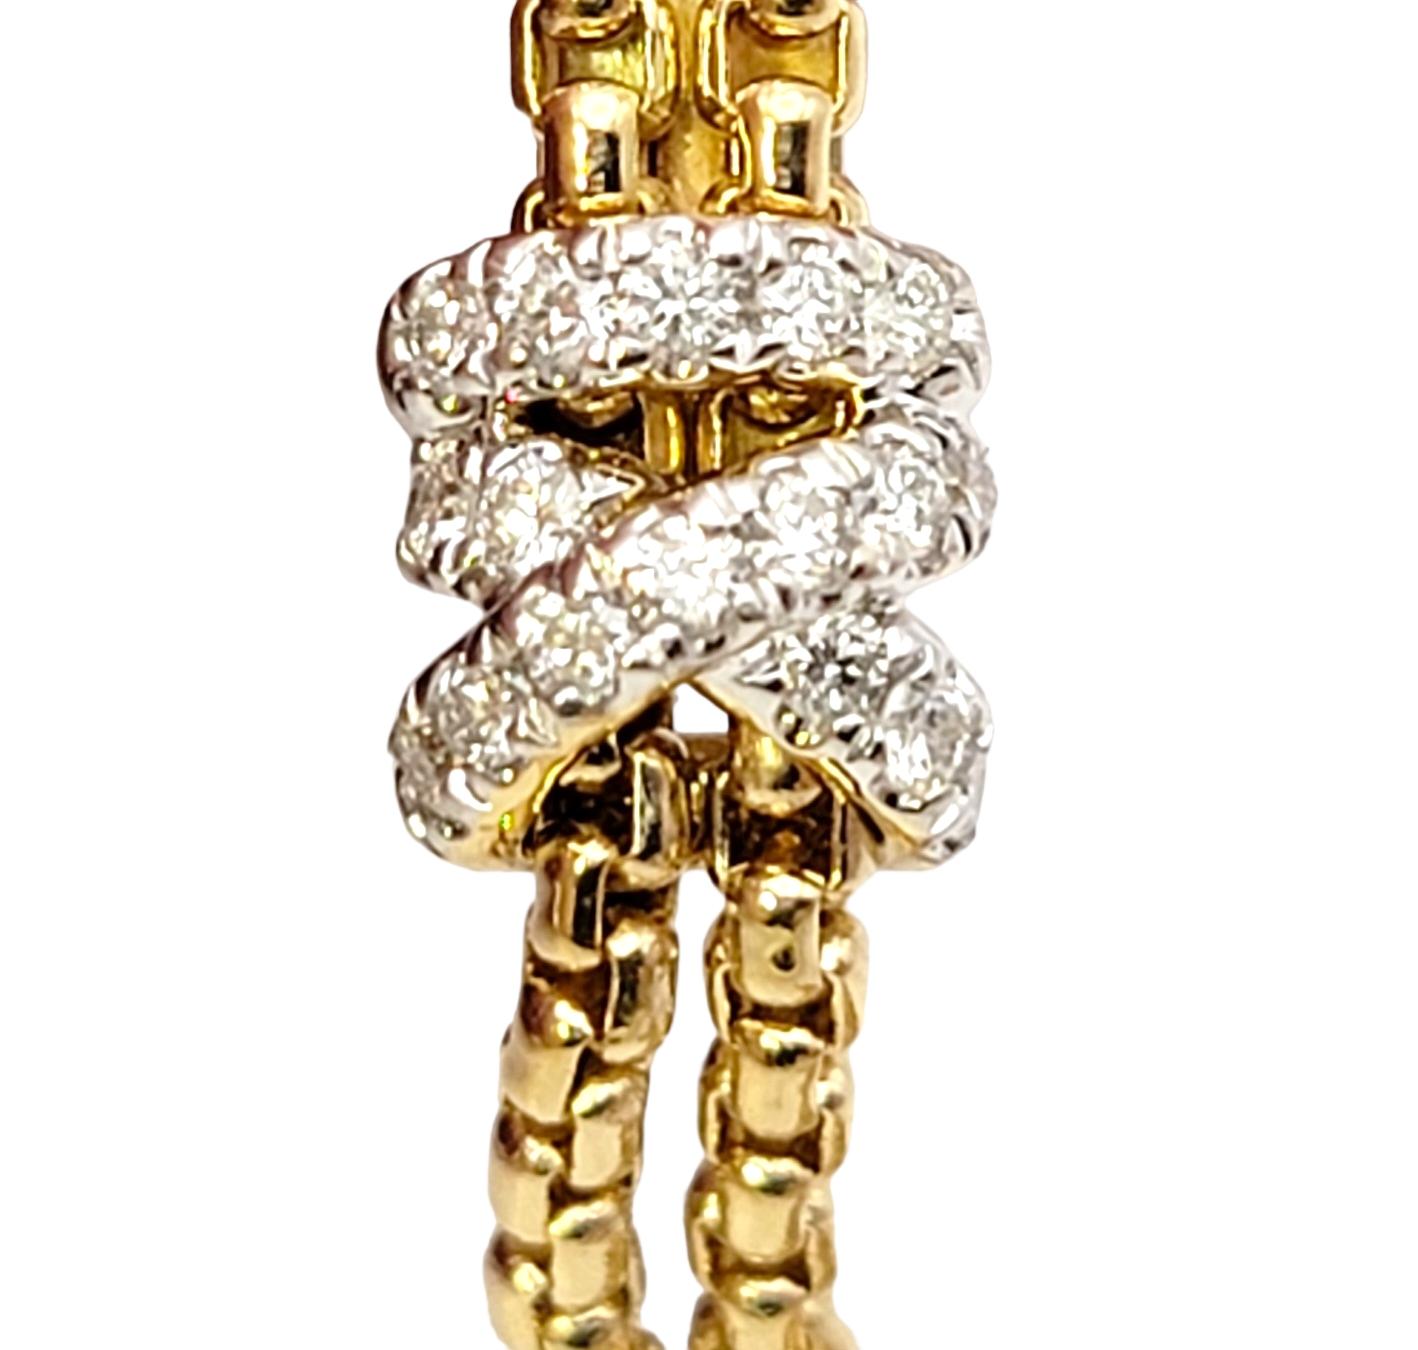 Contemporary David Yurman Helena Box Chain Drop Earrings with Diamonds in 18 Karat Gold